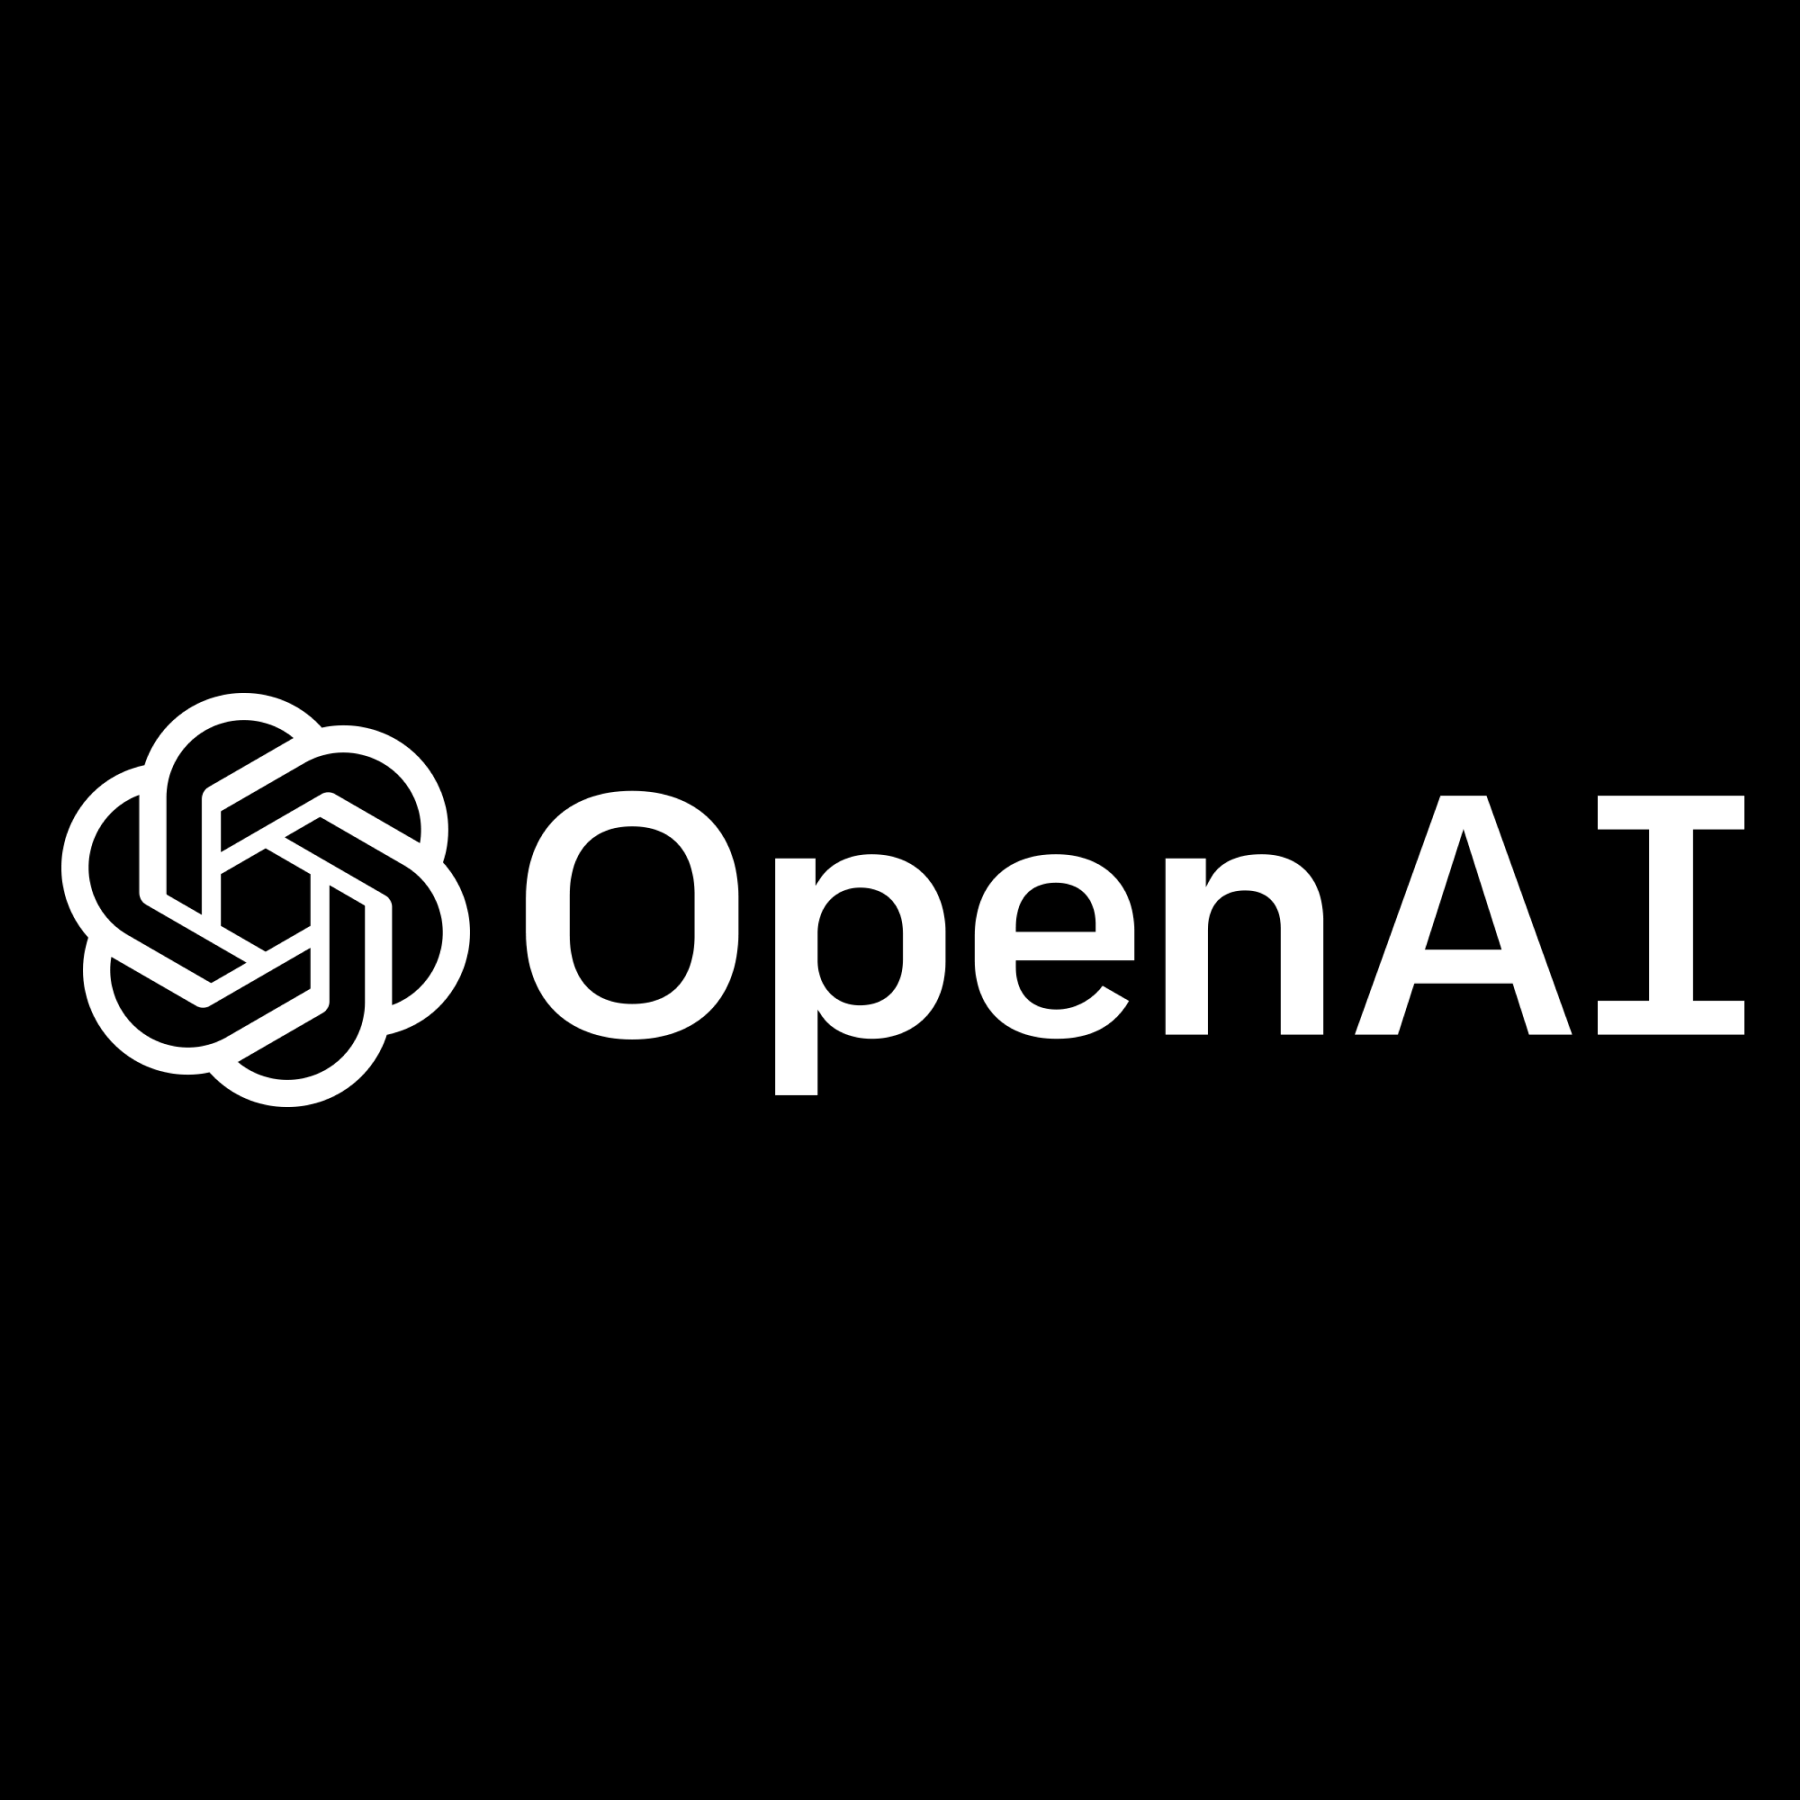 OpenAI GPT